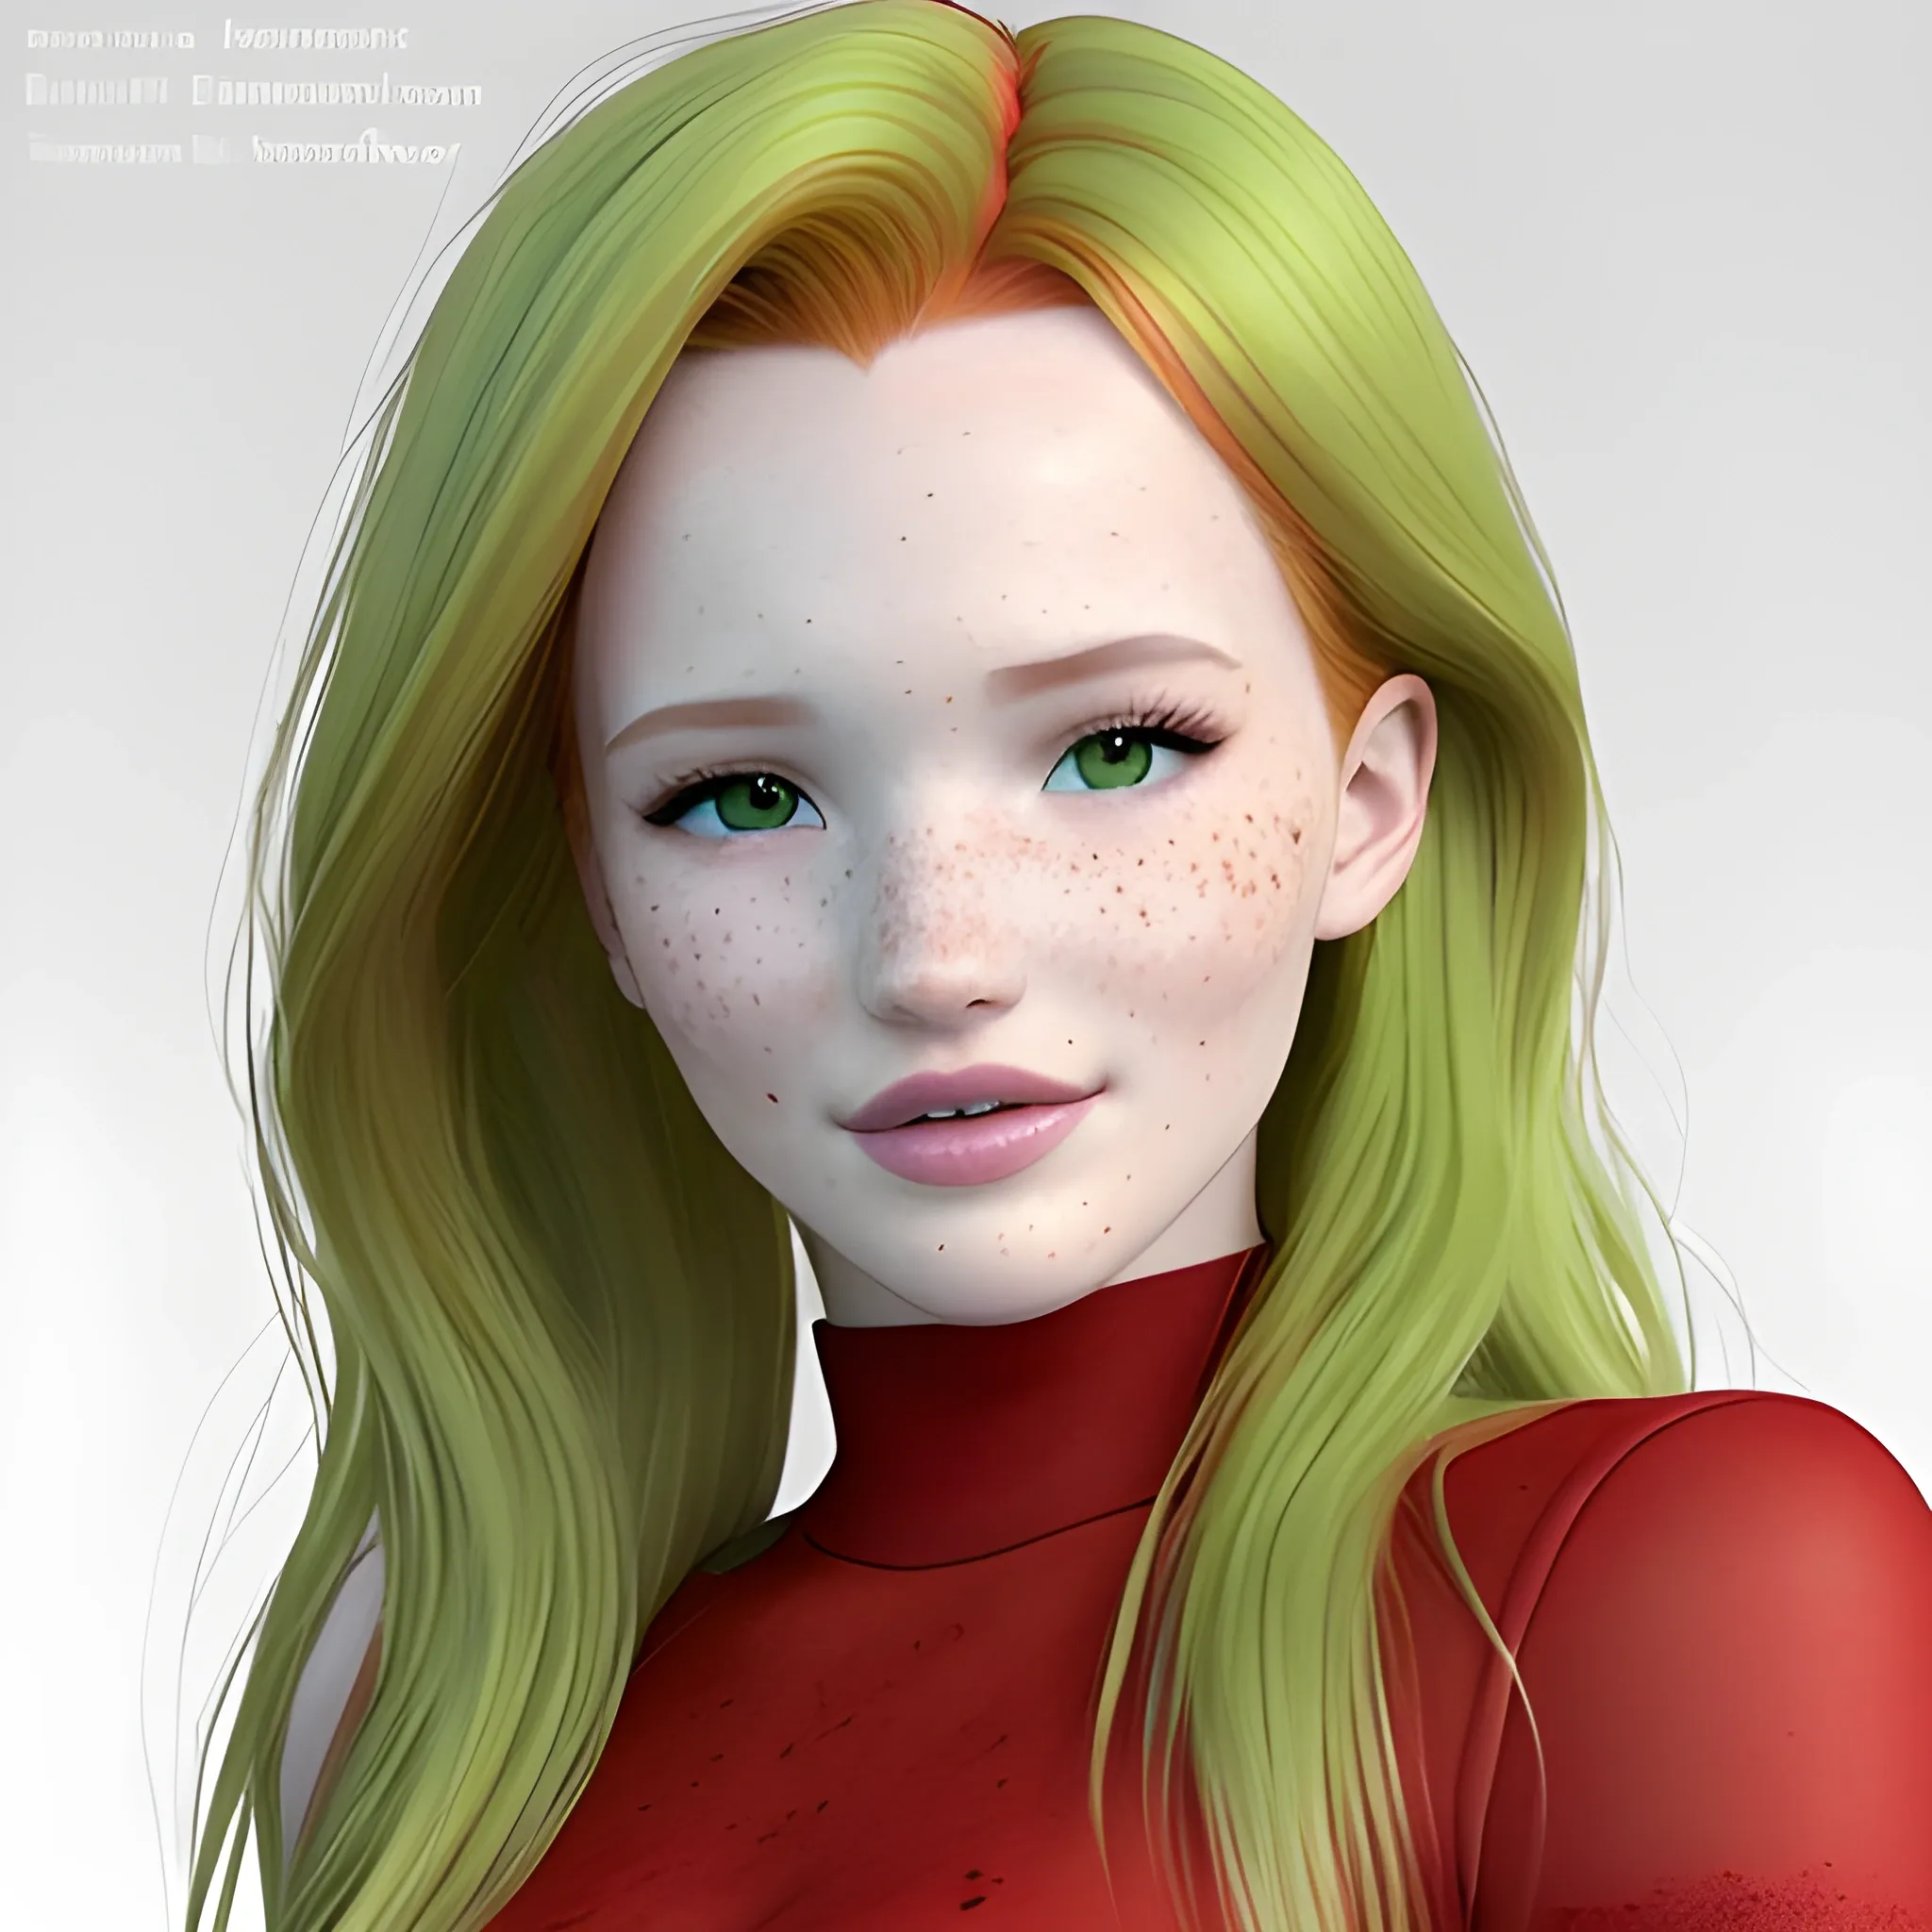 Bella Thorne / Dove Cameron face morph, 3D, red hair, green eyes, freckles